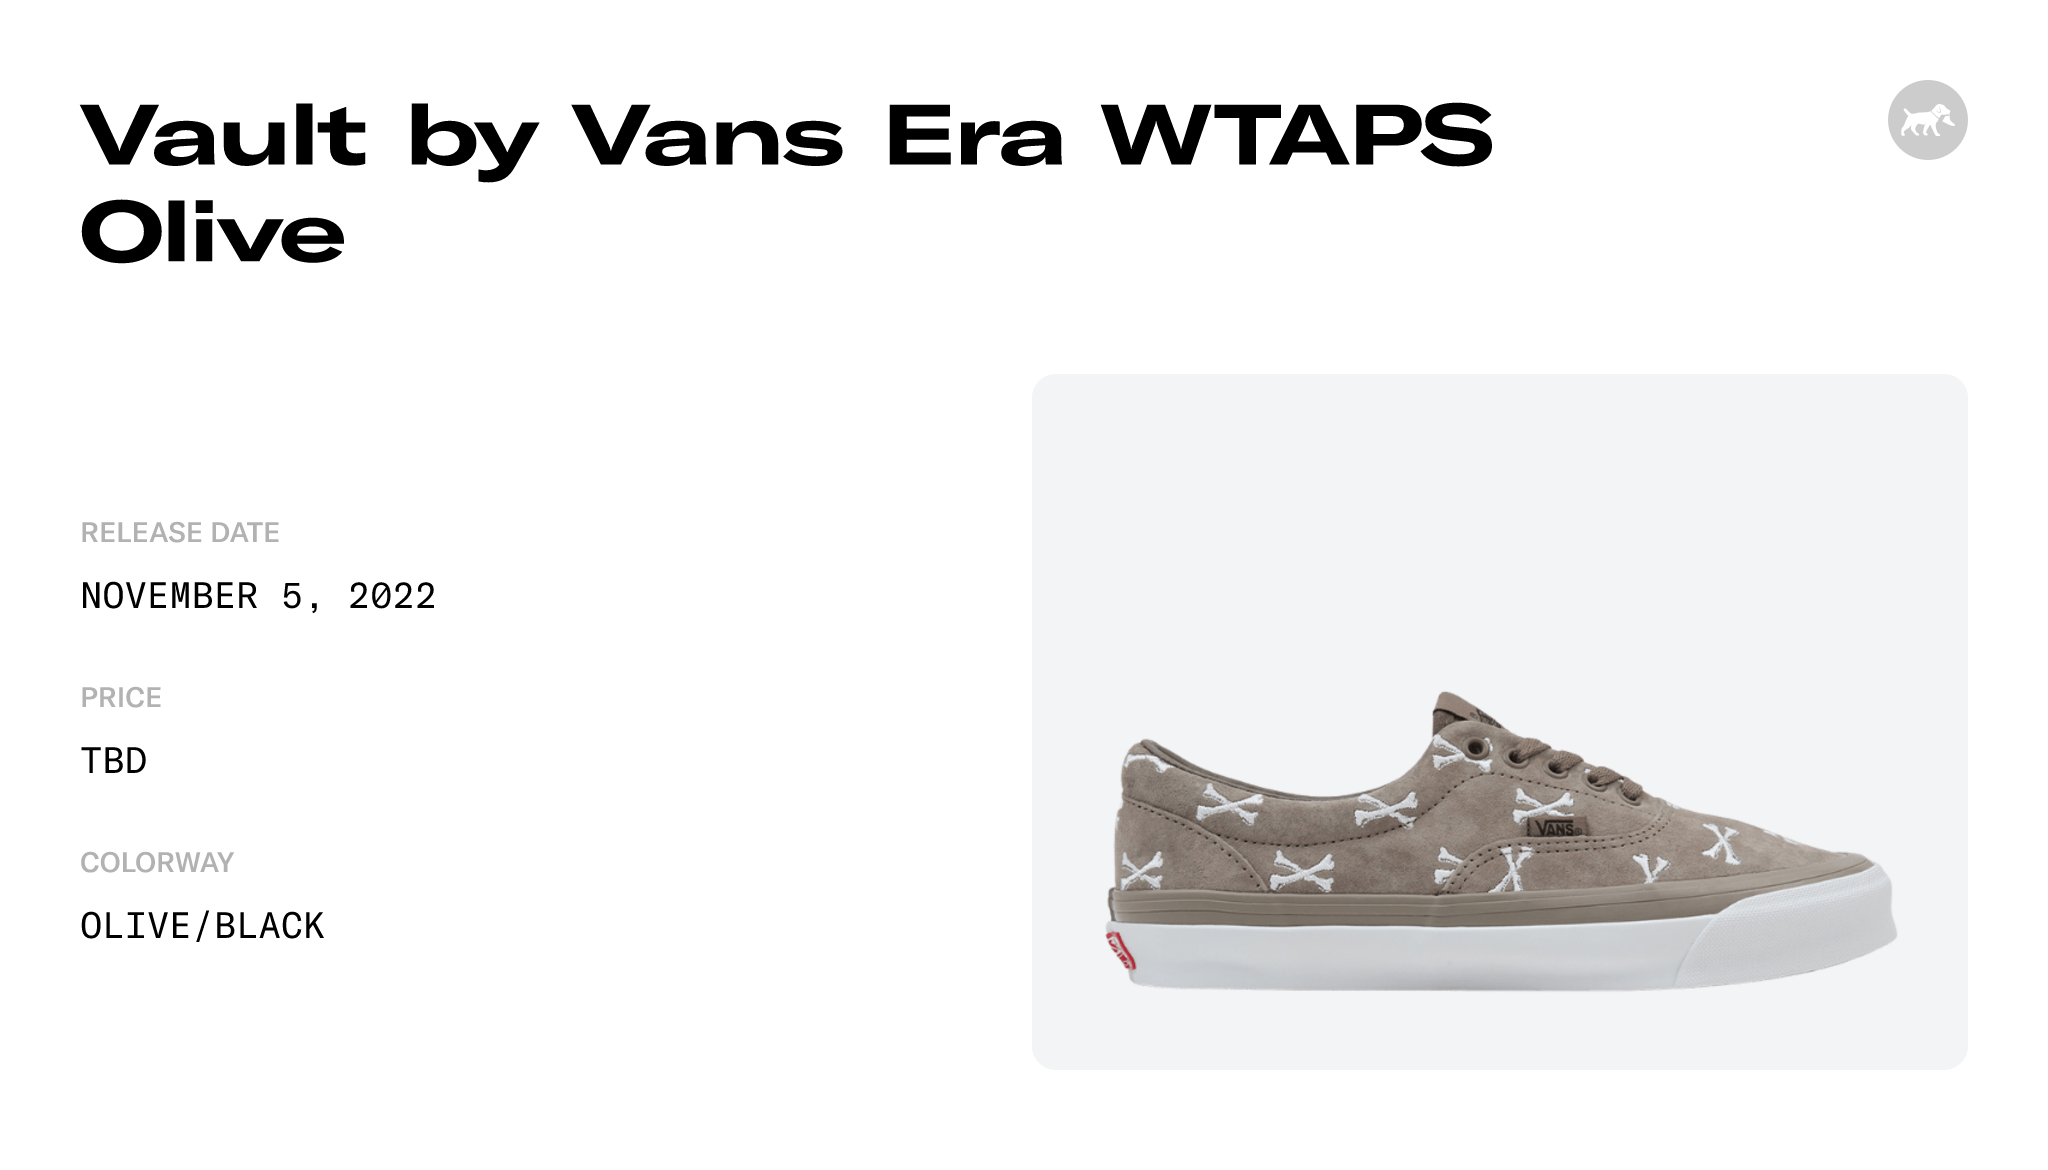 Vault by Vans Era WTAPS Olive Raffles and Release Date